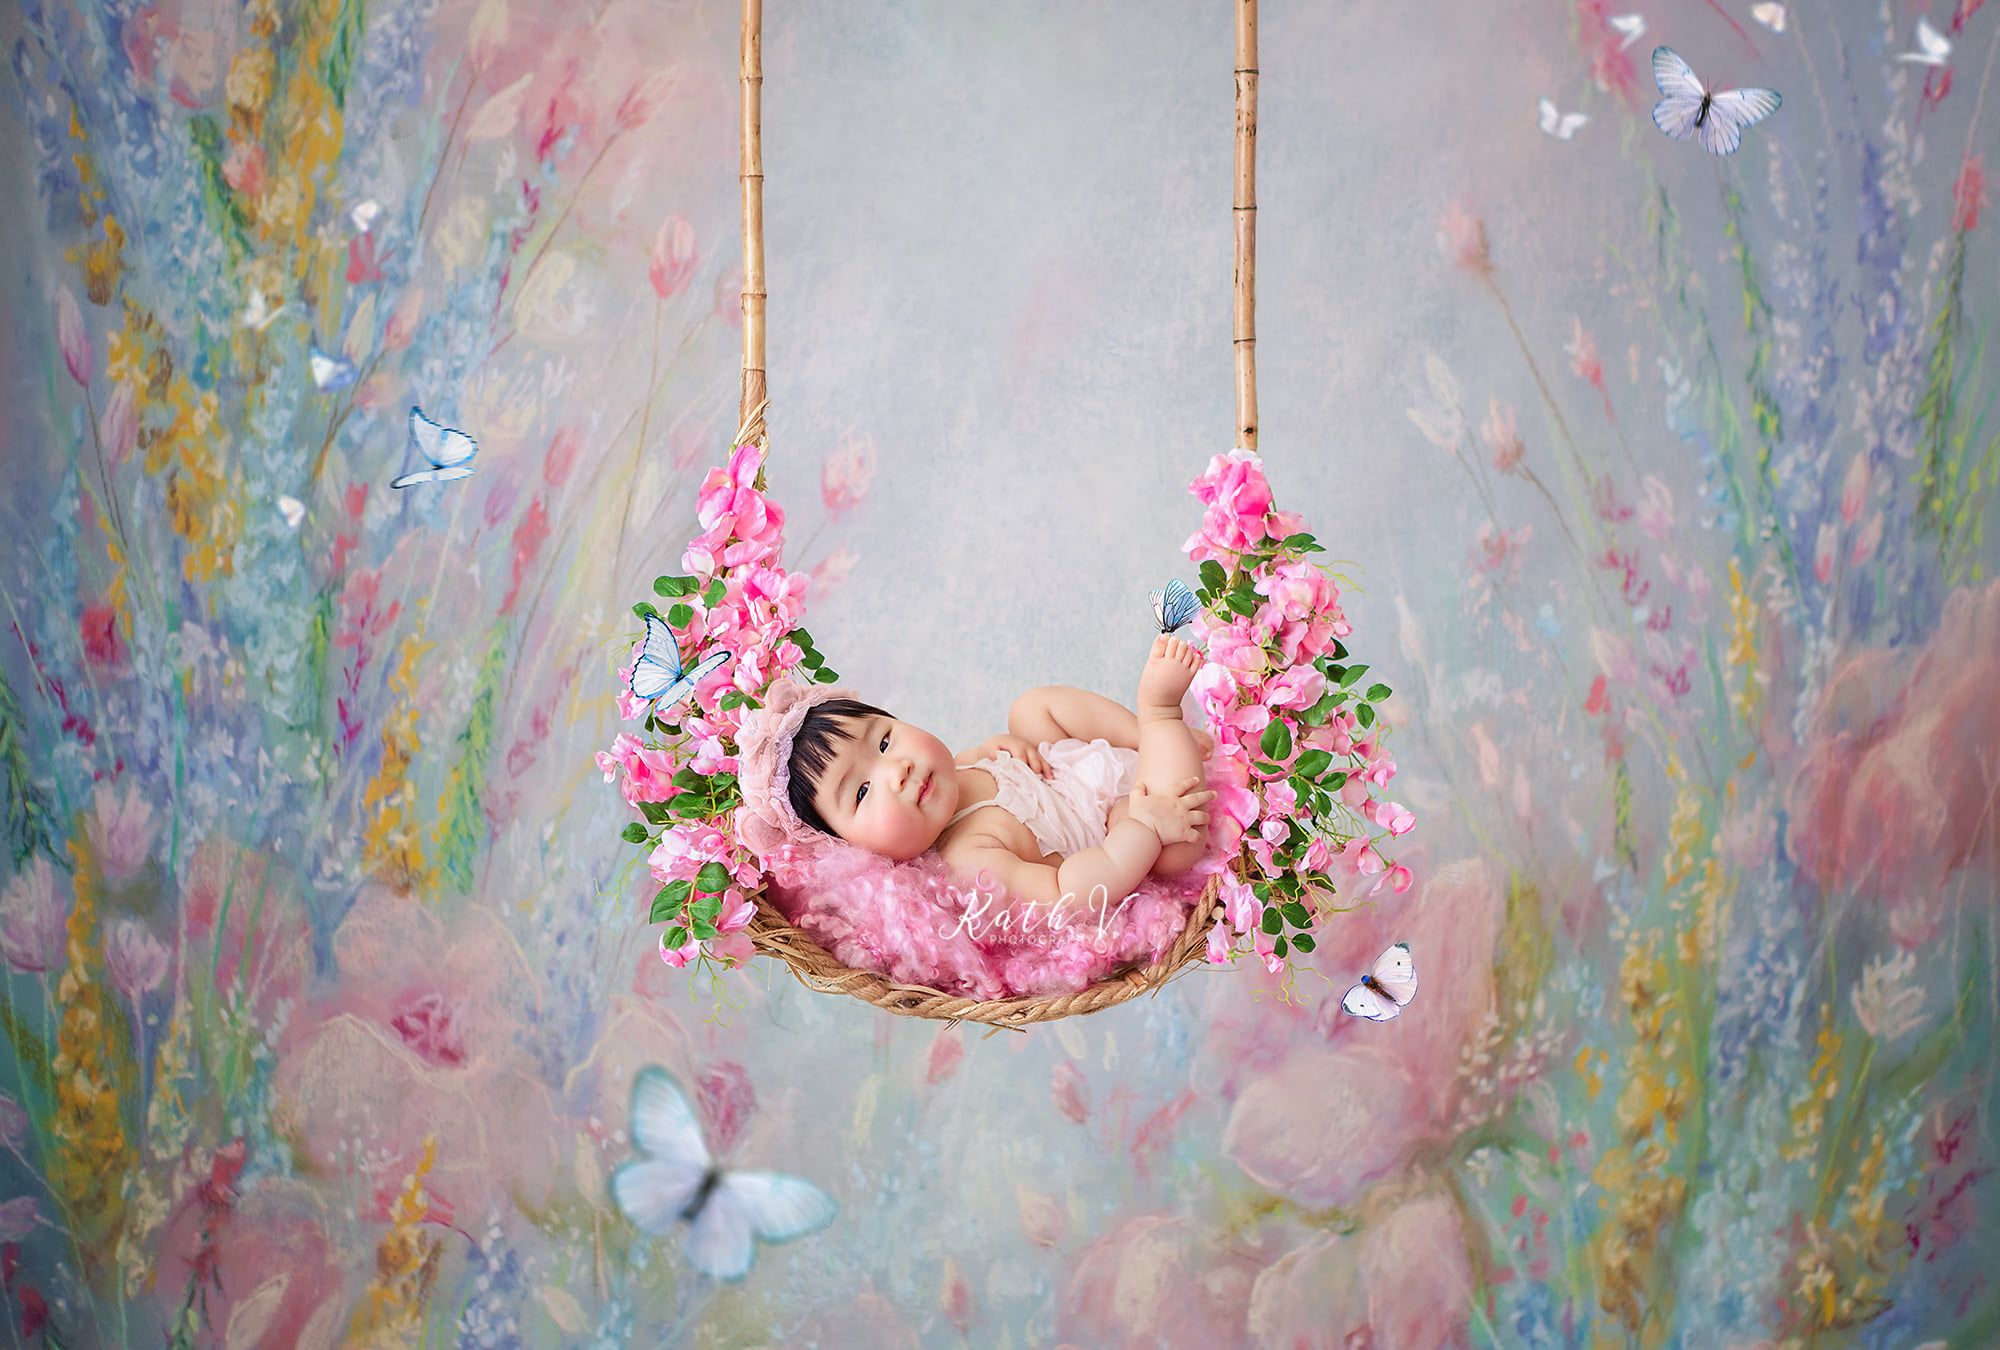 Louise Newborn Art Childrens Photography Background S